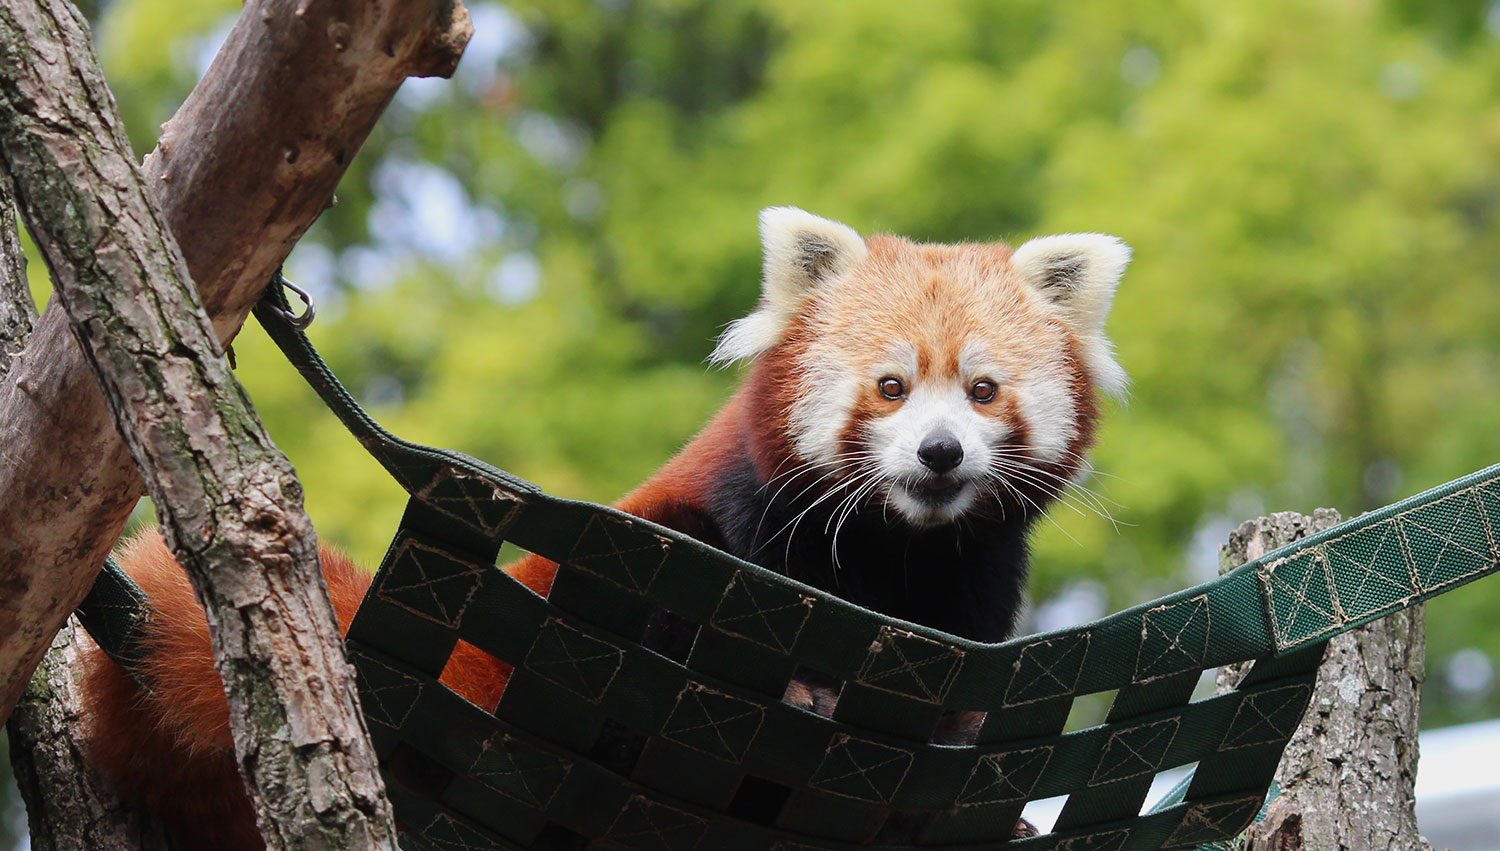 Red panda Starlight in her canopy